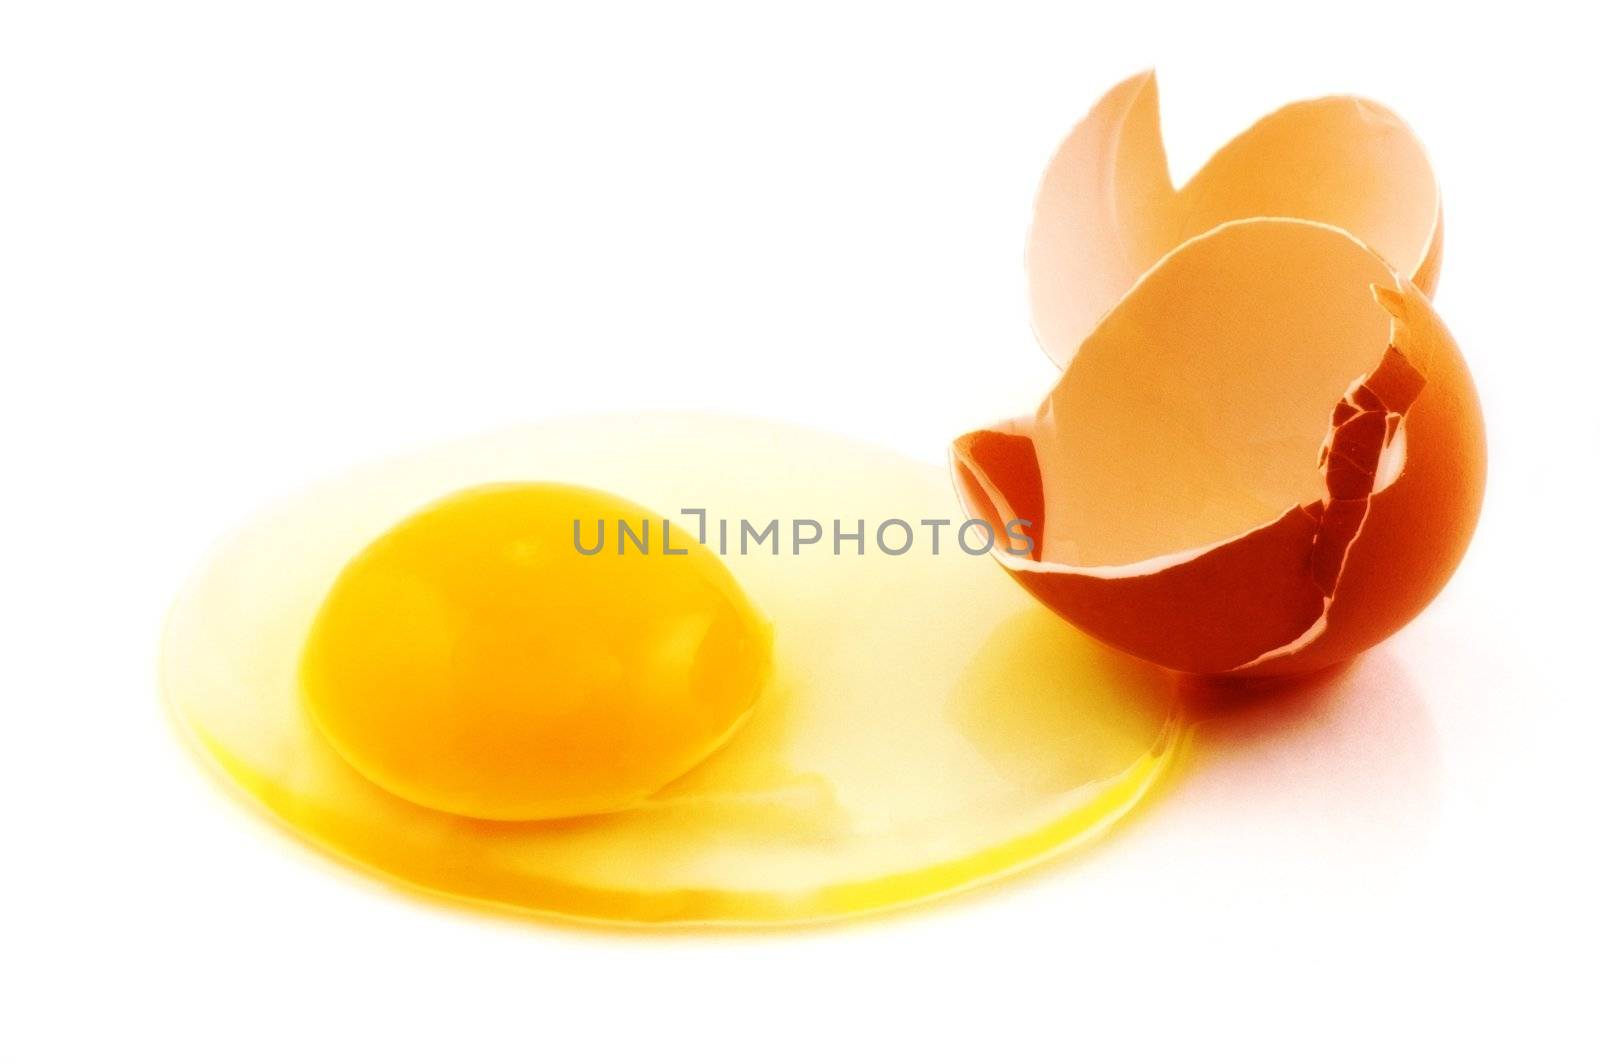 Broken egg by sil